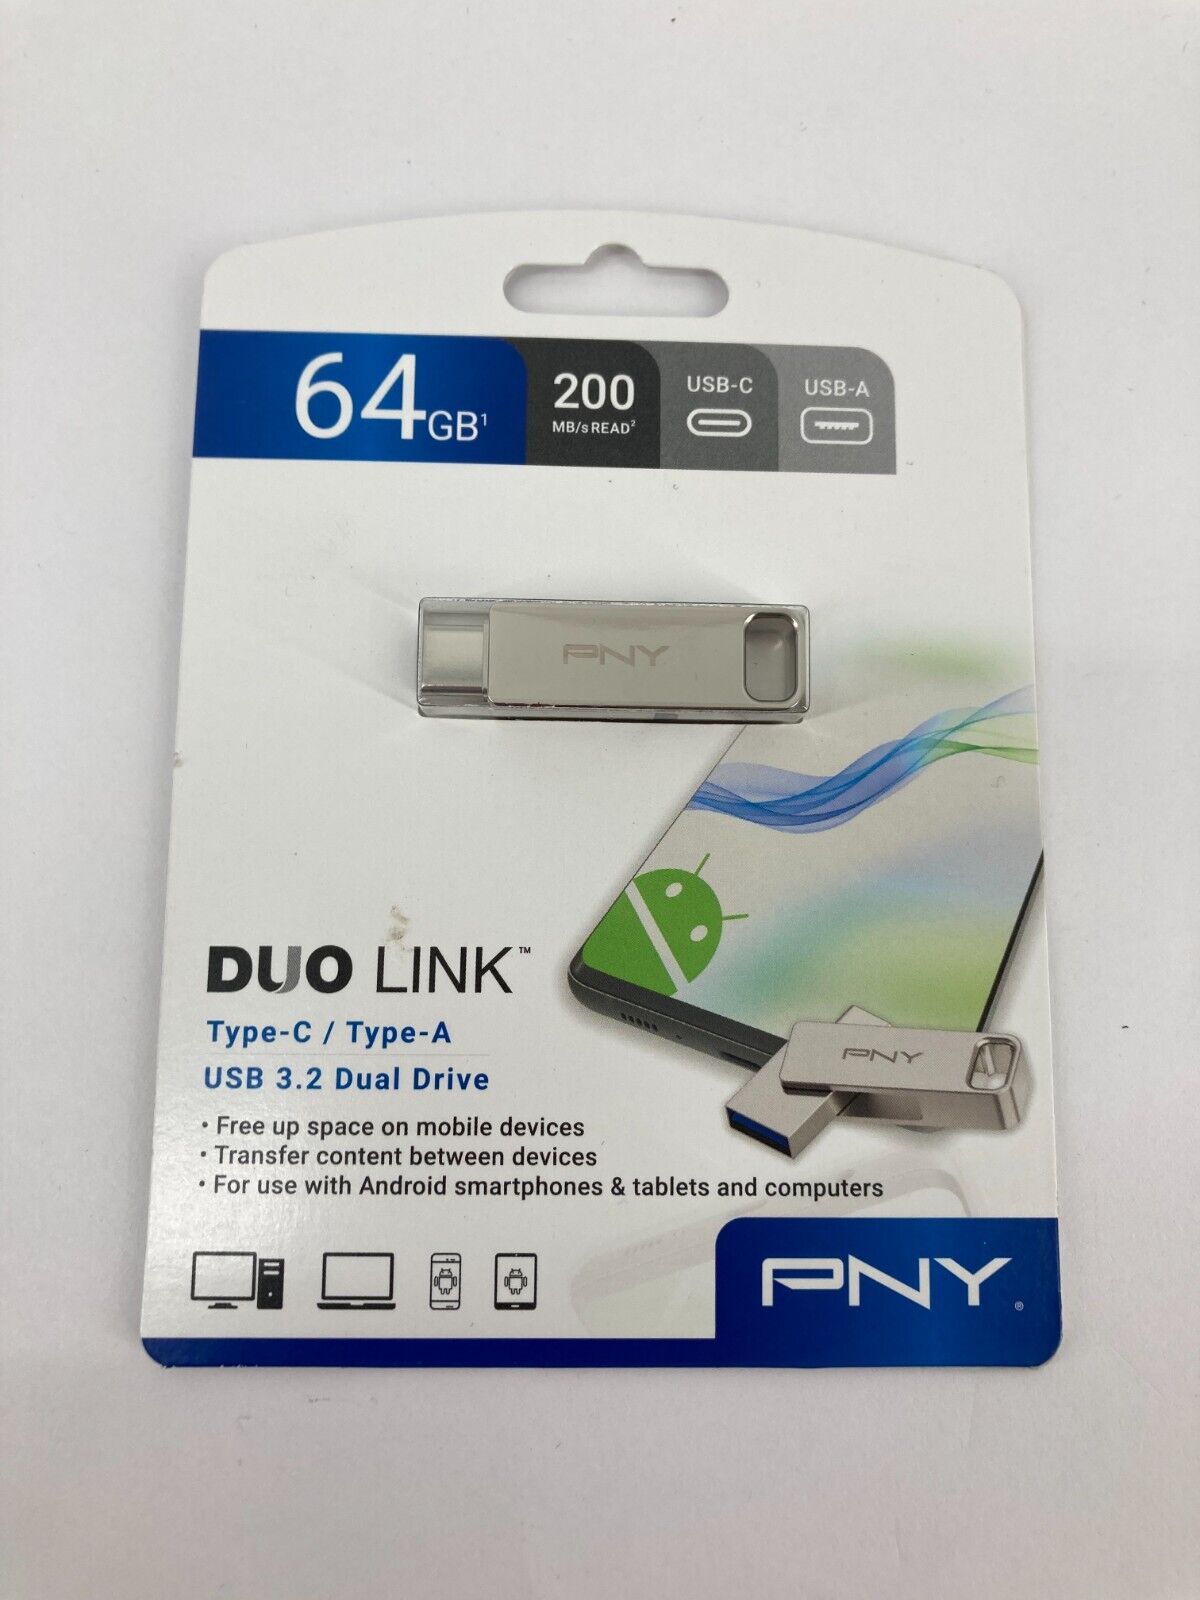 (3) PNY 64GB Duo Link USB 3.2 Type-C Dual Flash Drive